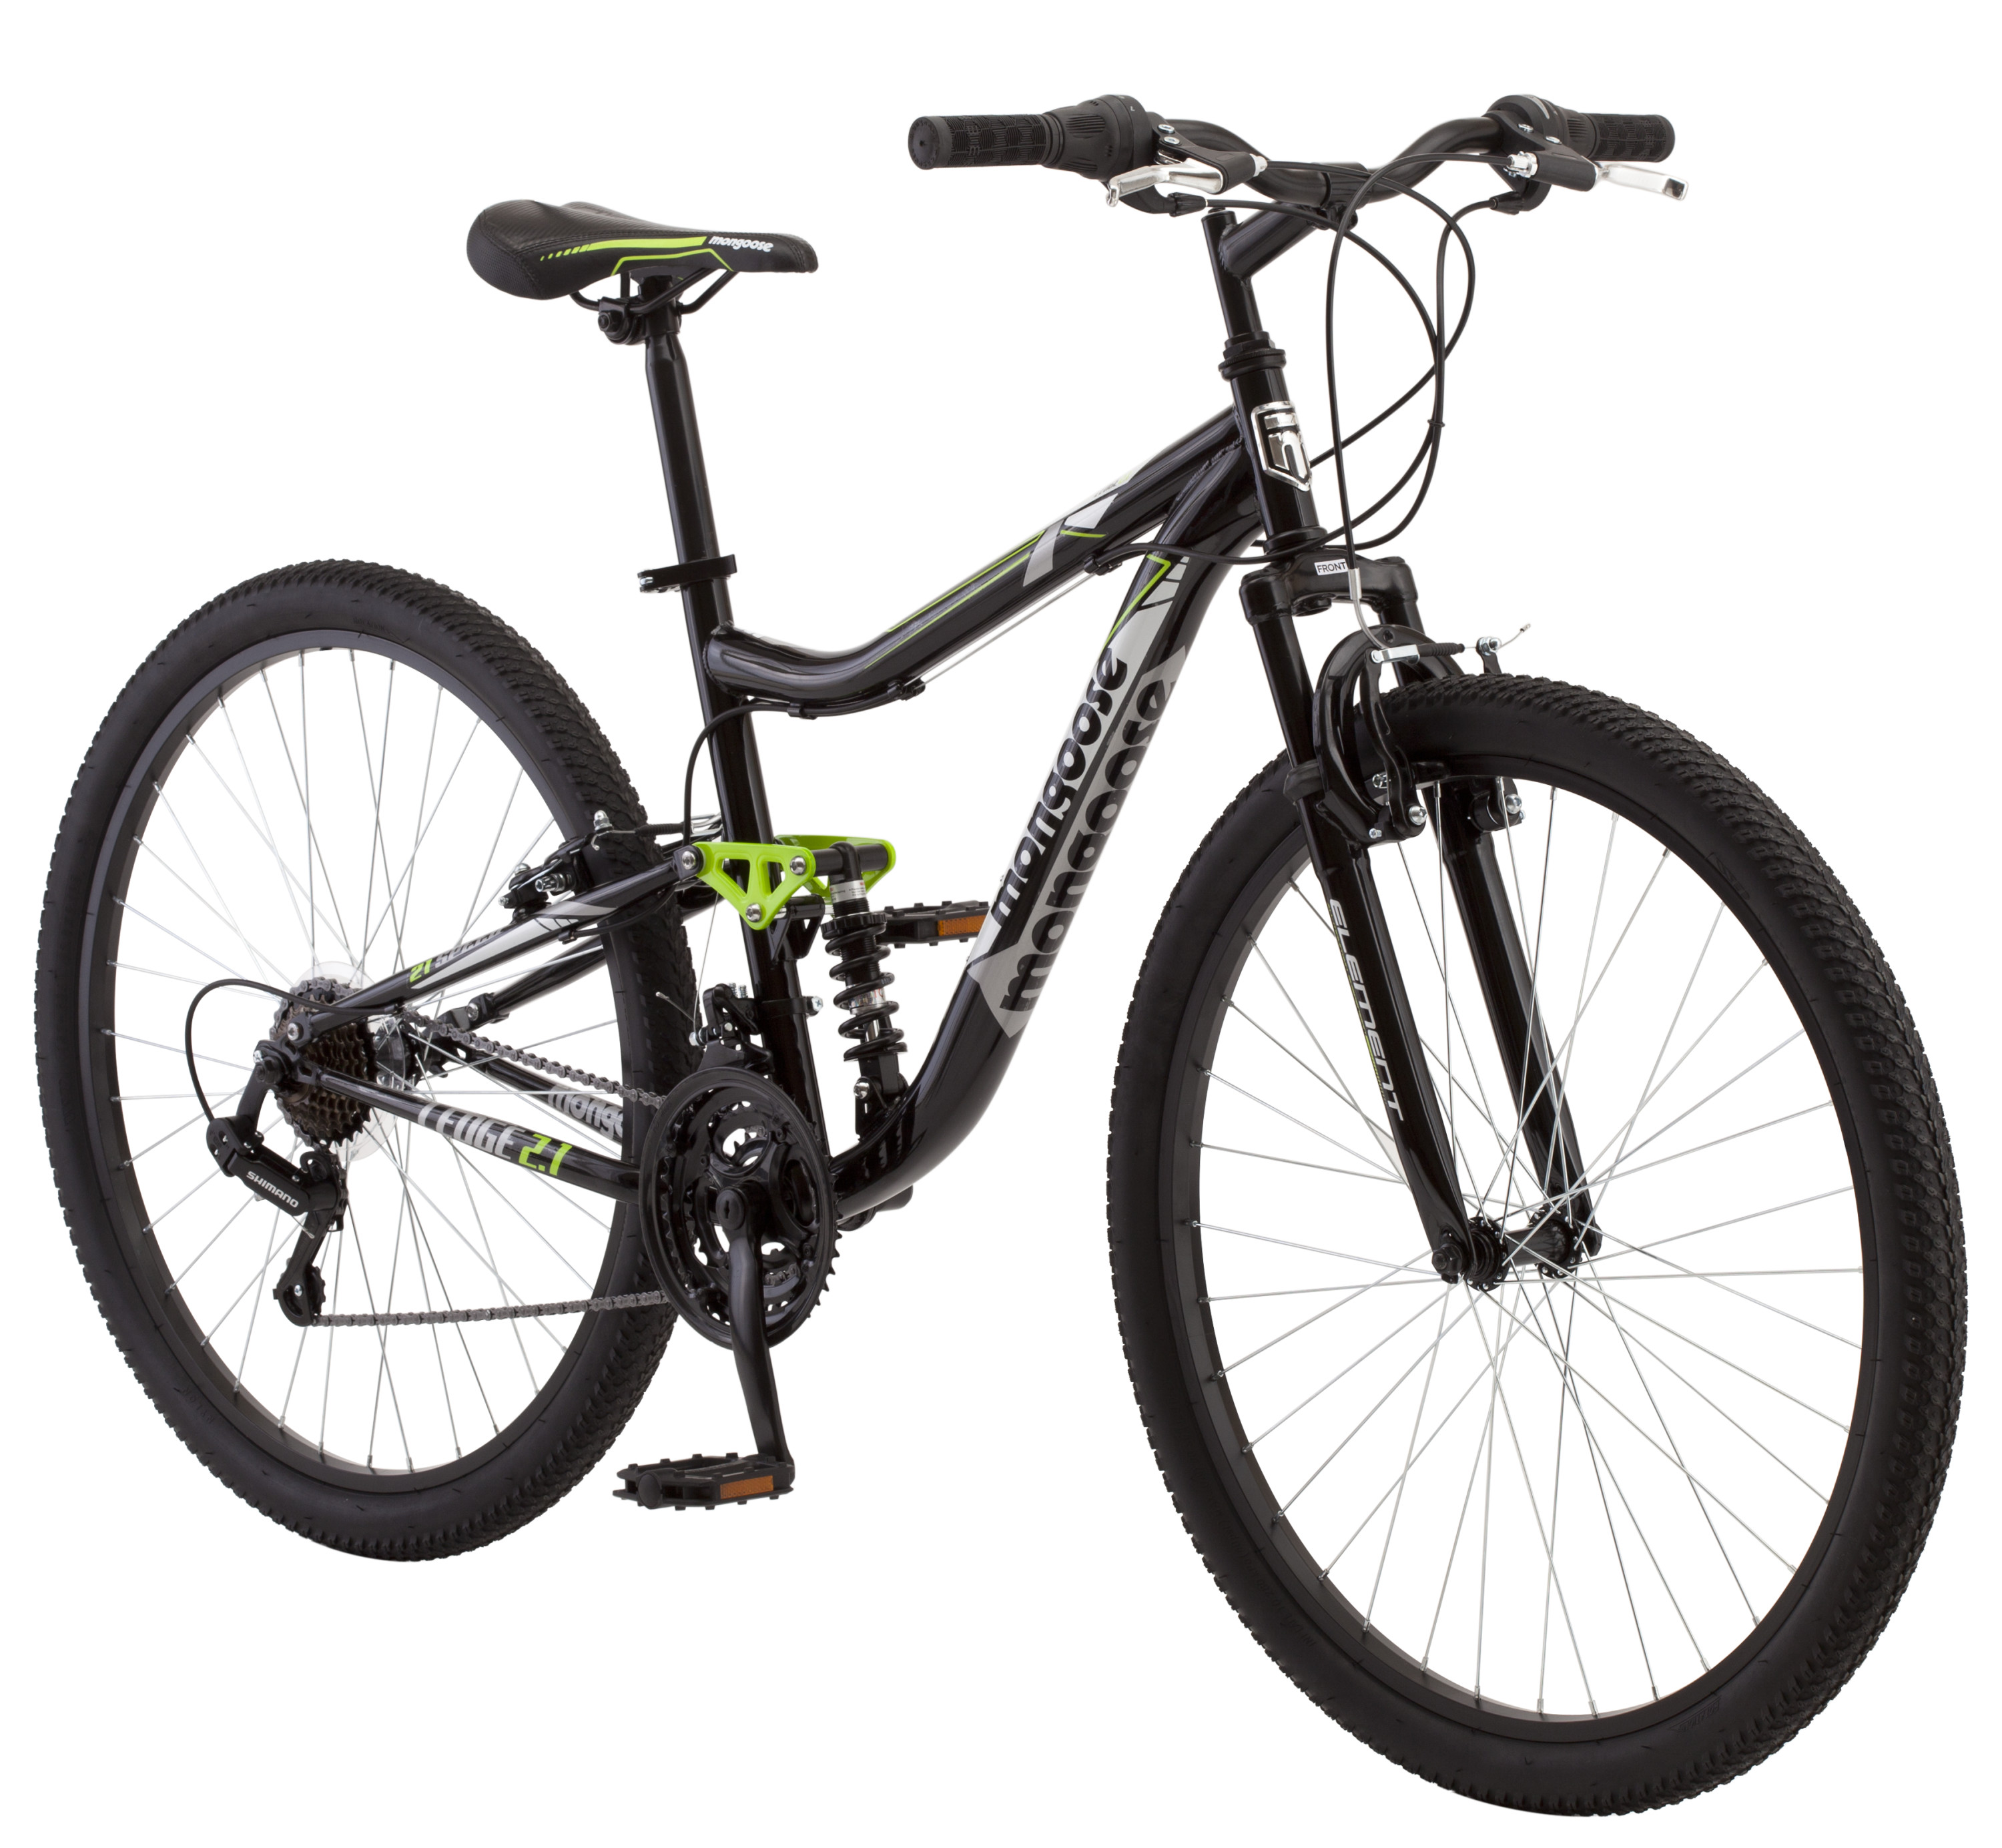 Mongoose Ledge 2.1 21 Speeds Men’s Mountain Bike with 27.5″ Wheels